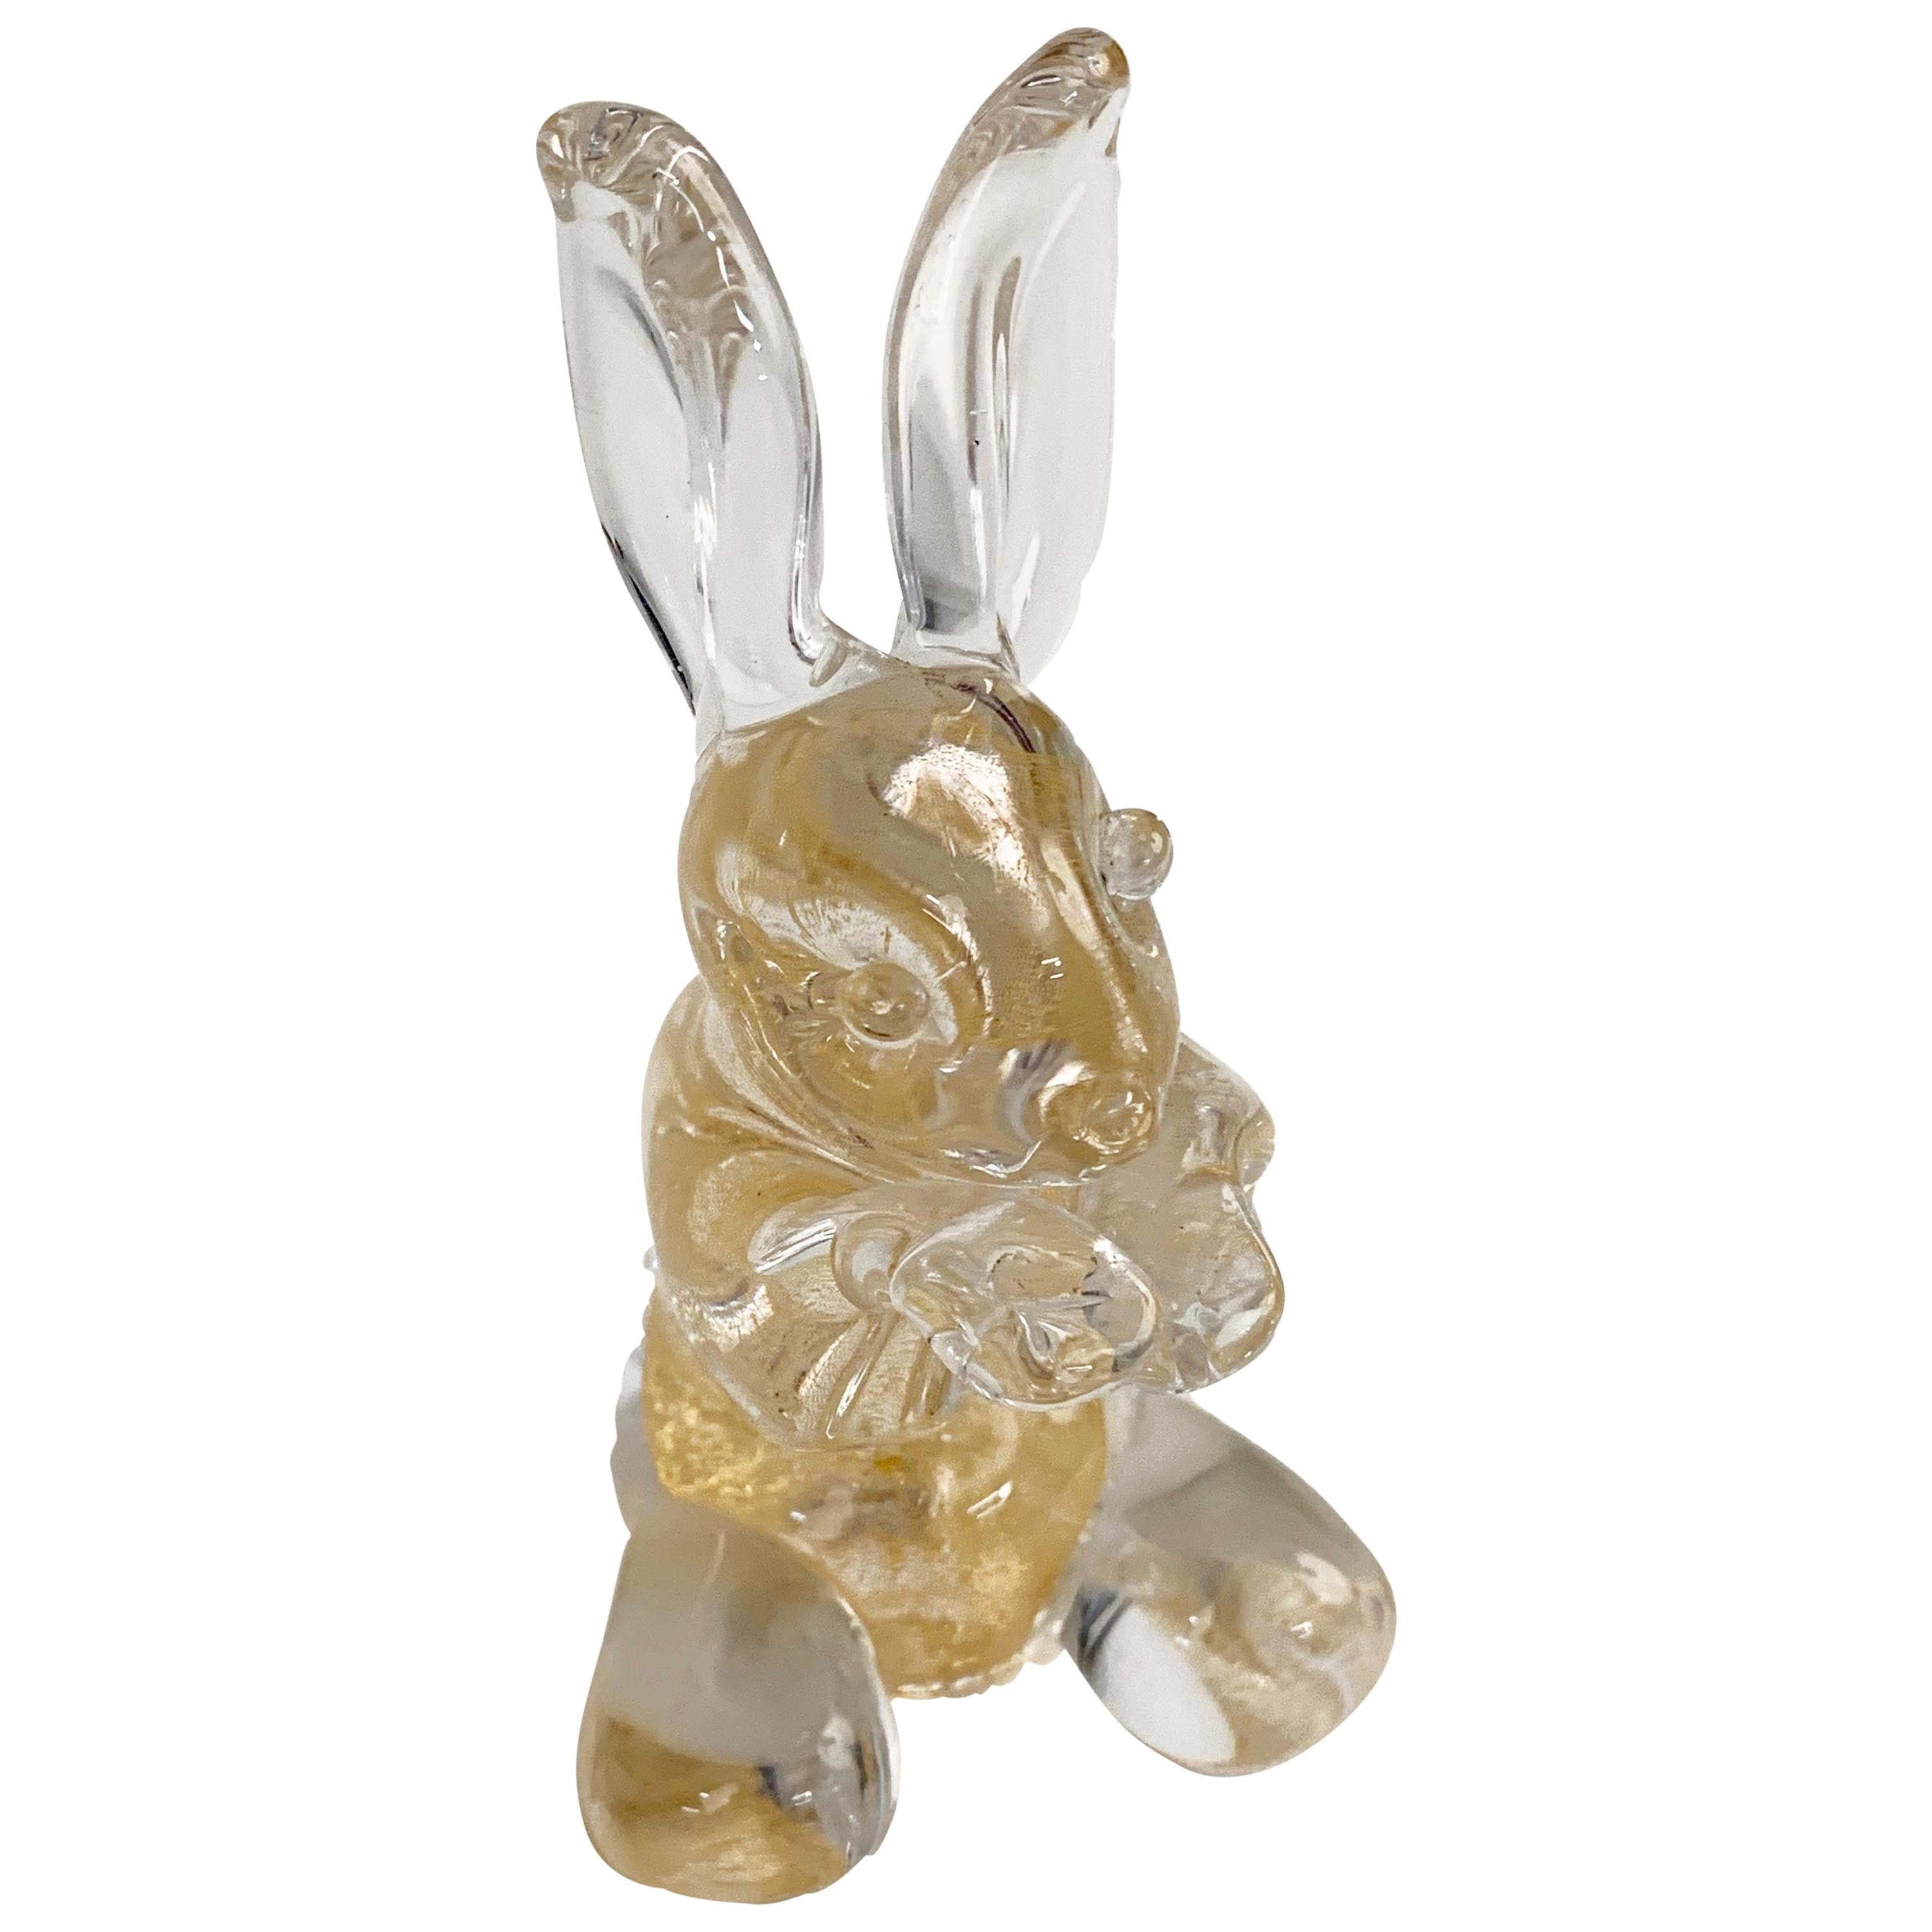 Seguso Midcentury Murano Glass Italian Rabbit Sculpture with Golden Dots, 1960s For Sale